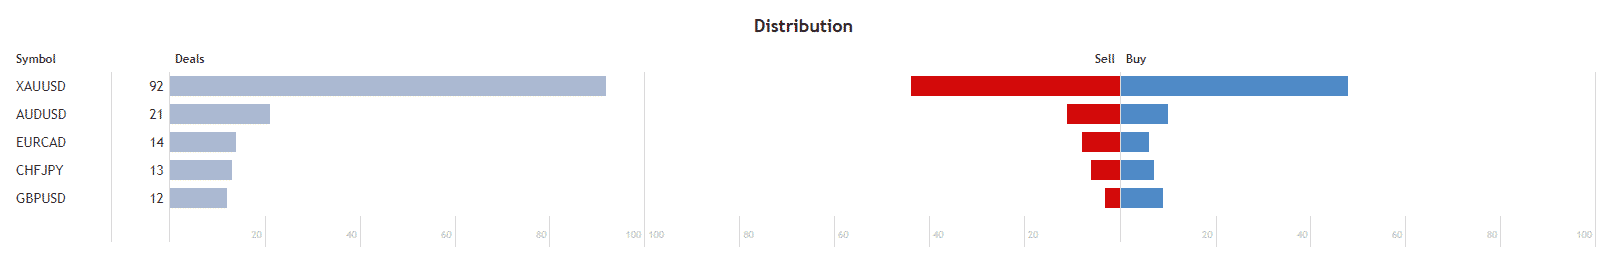 Advanced Hedge distribution.